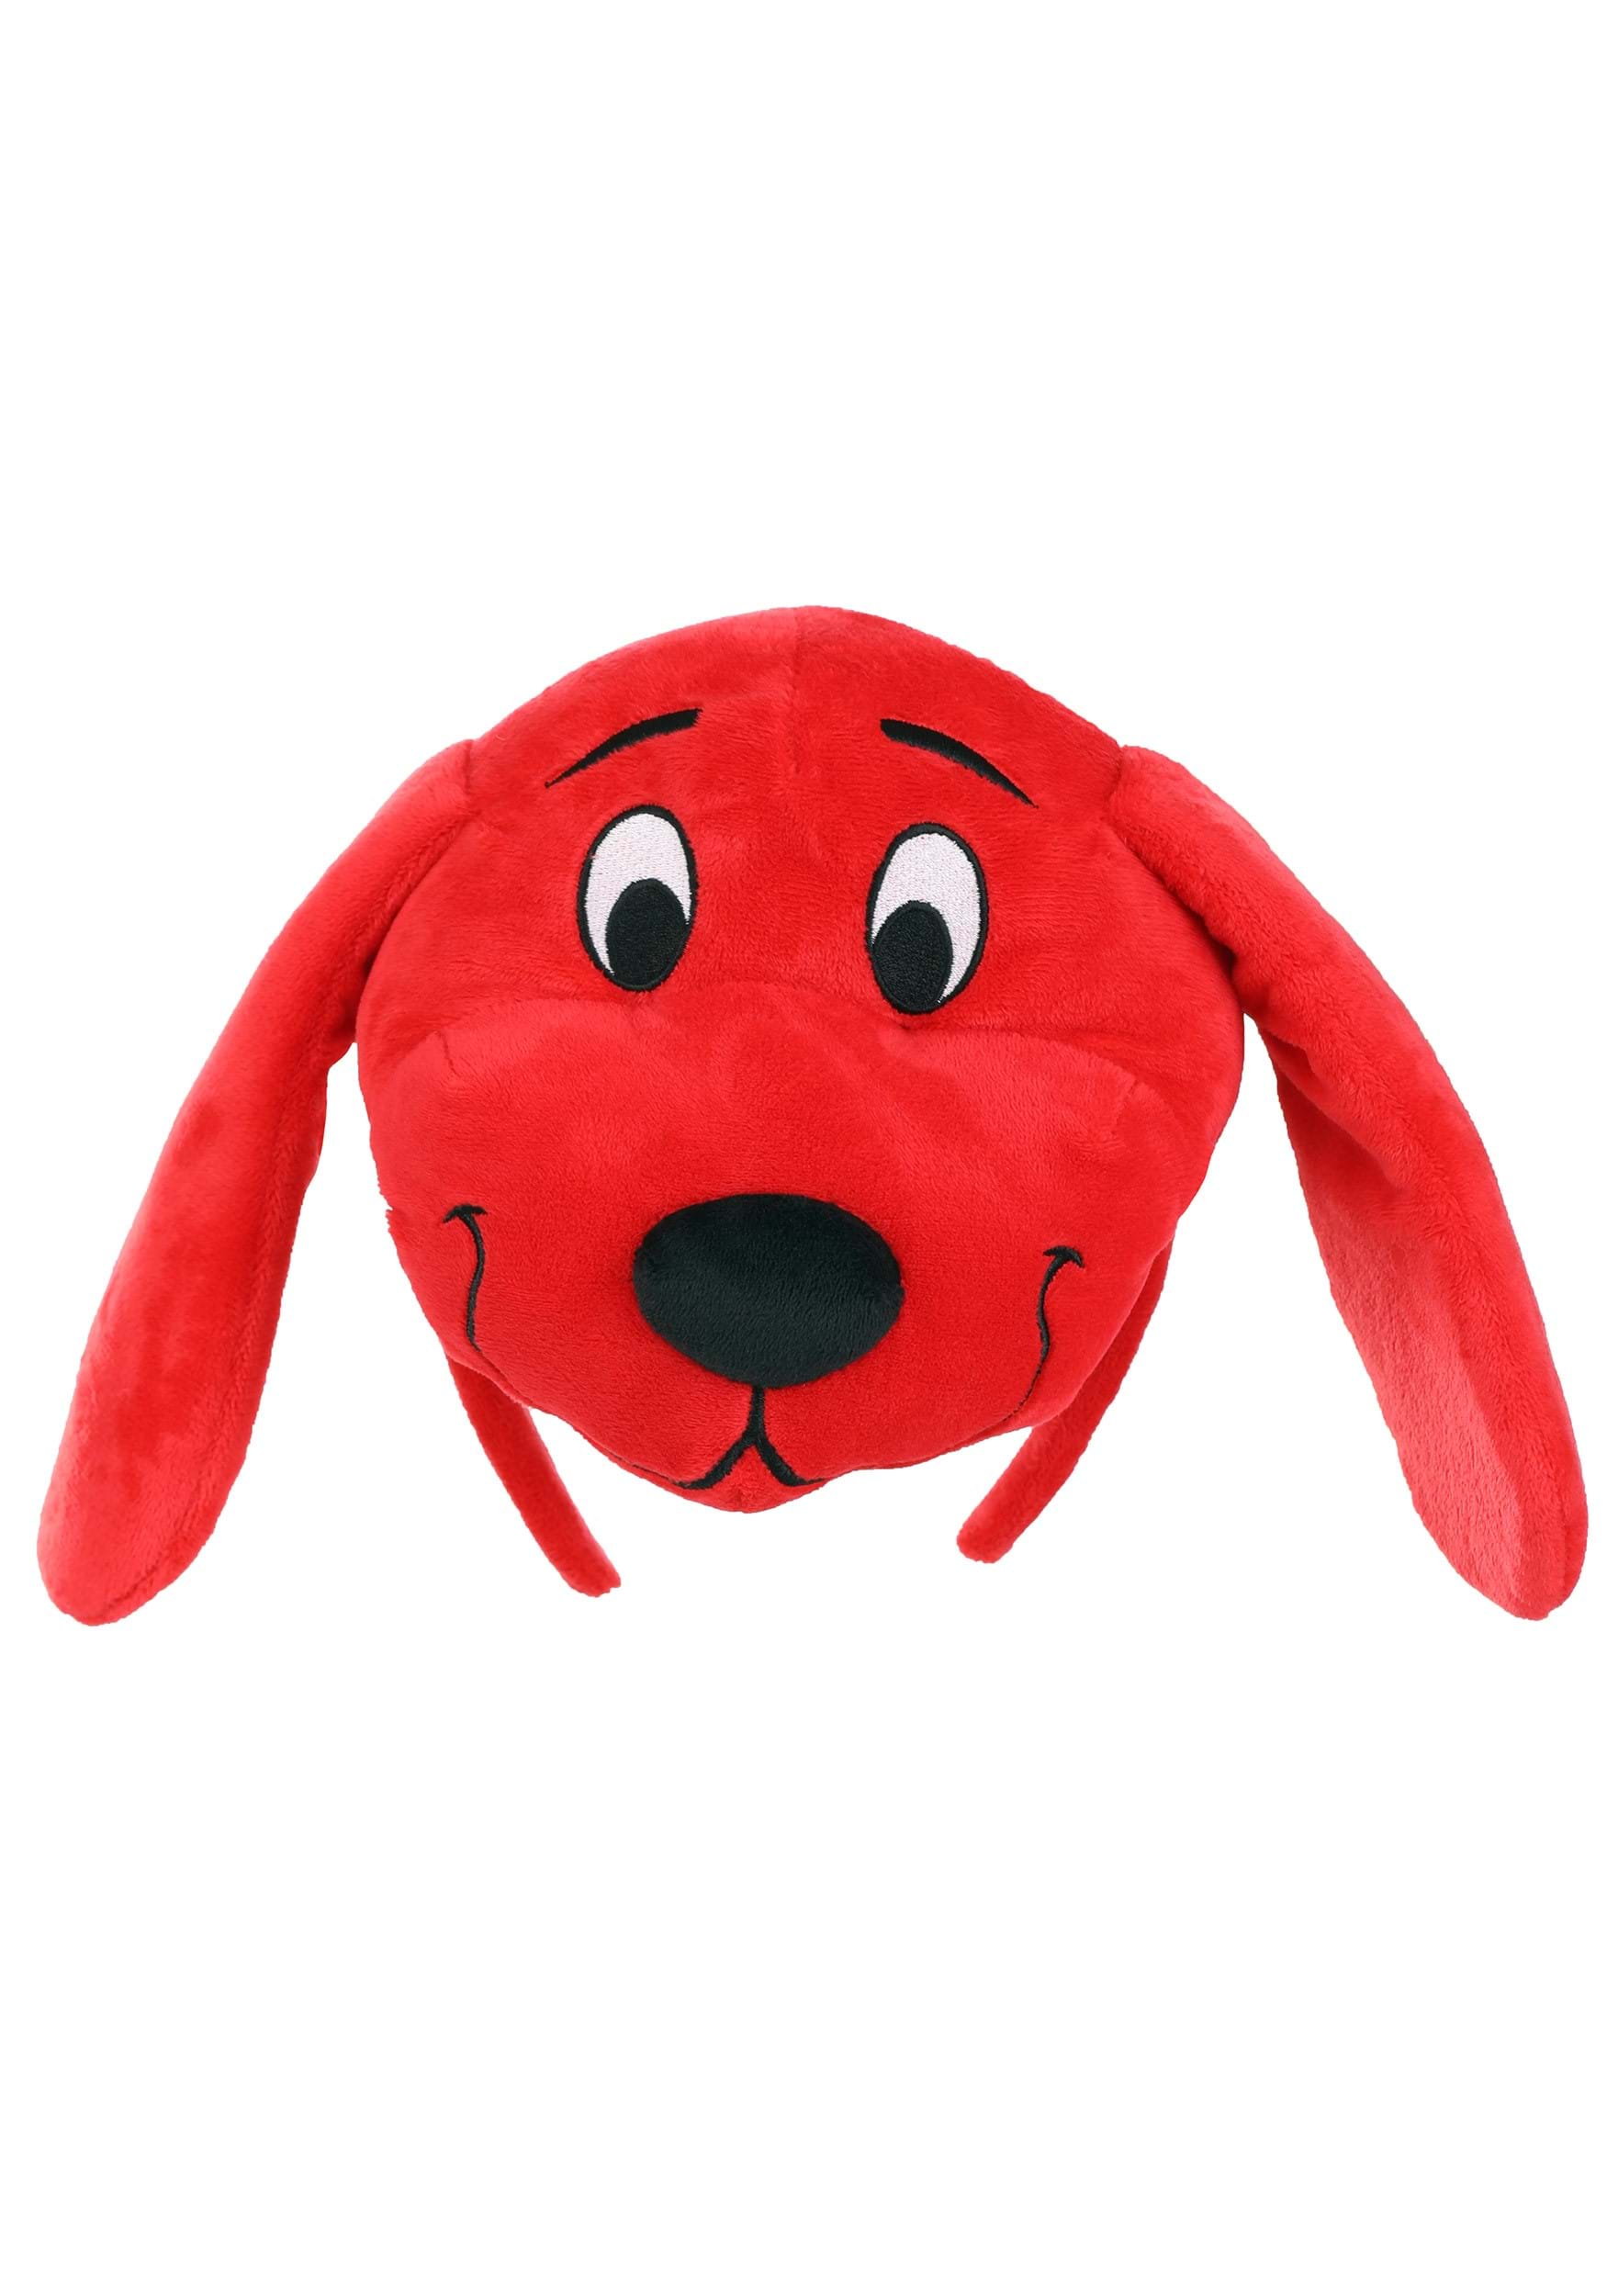 Clifford Face Costume Headband